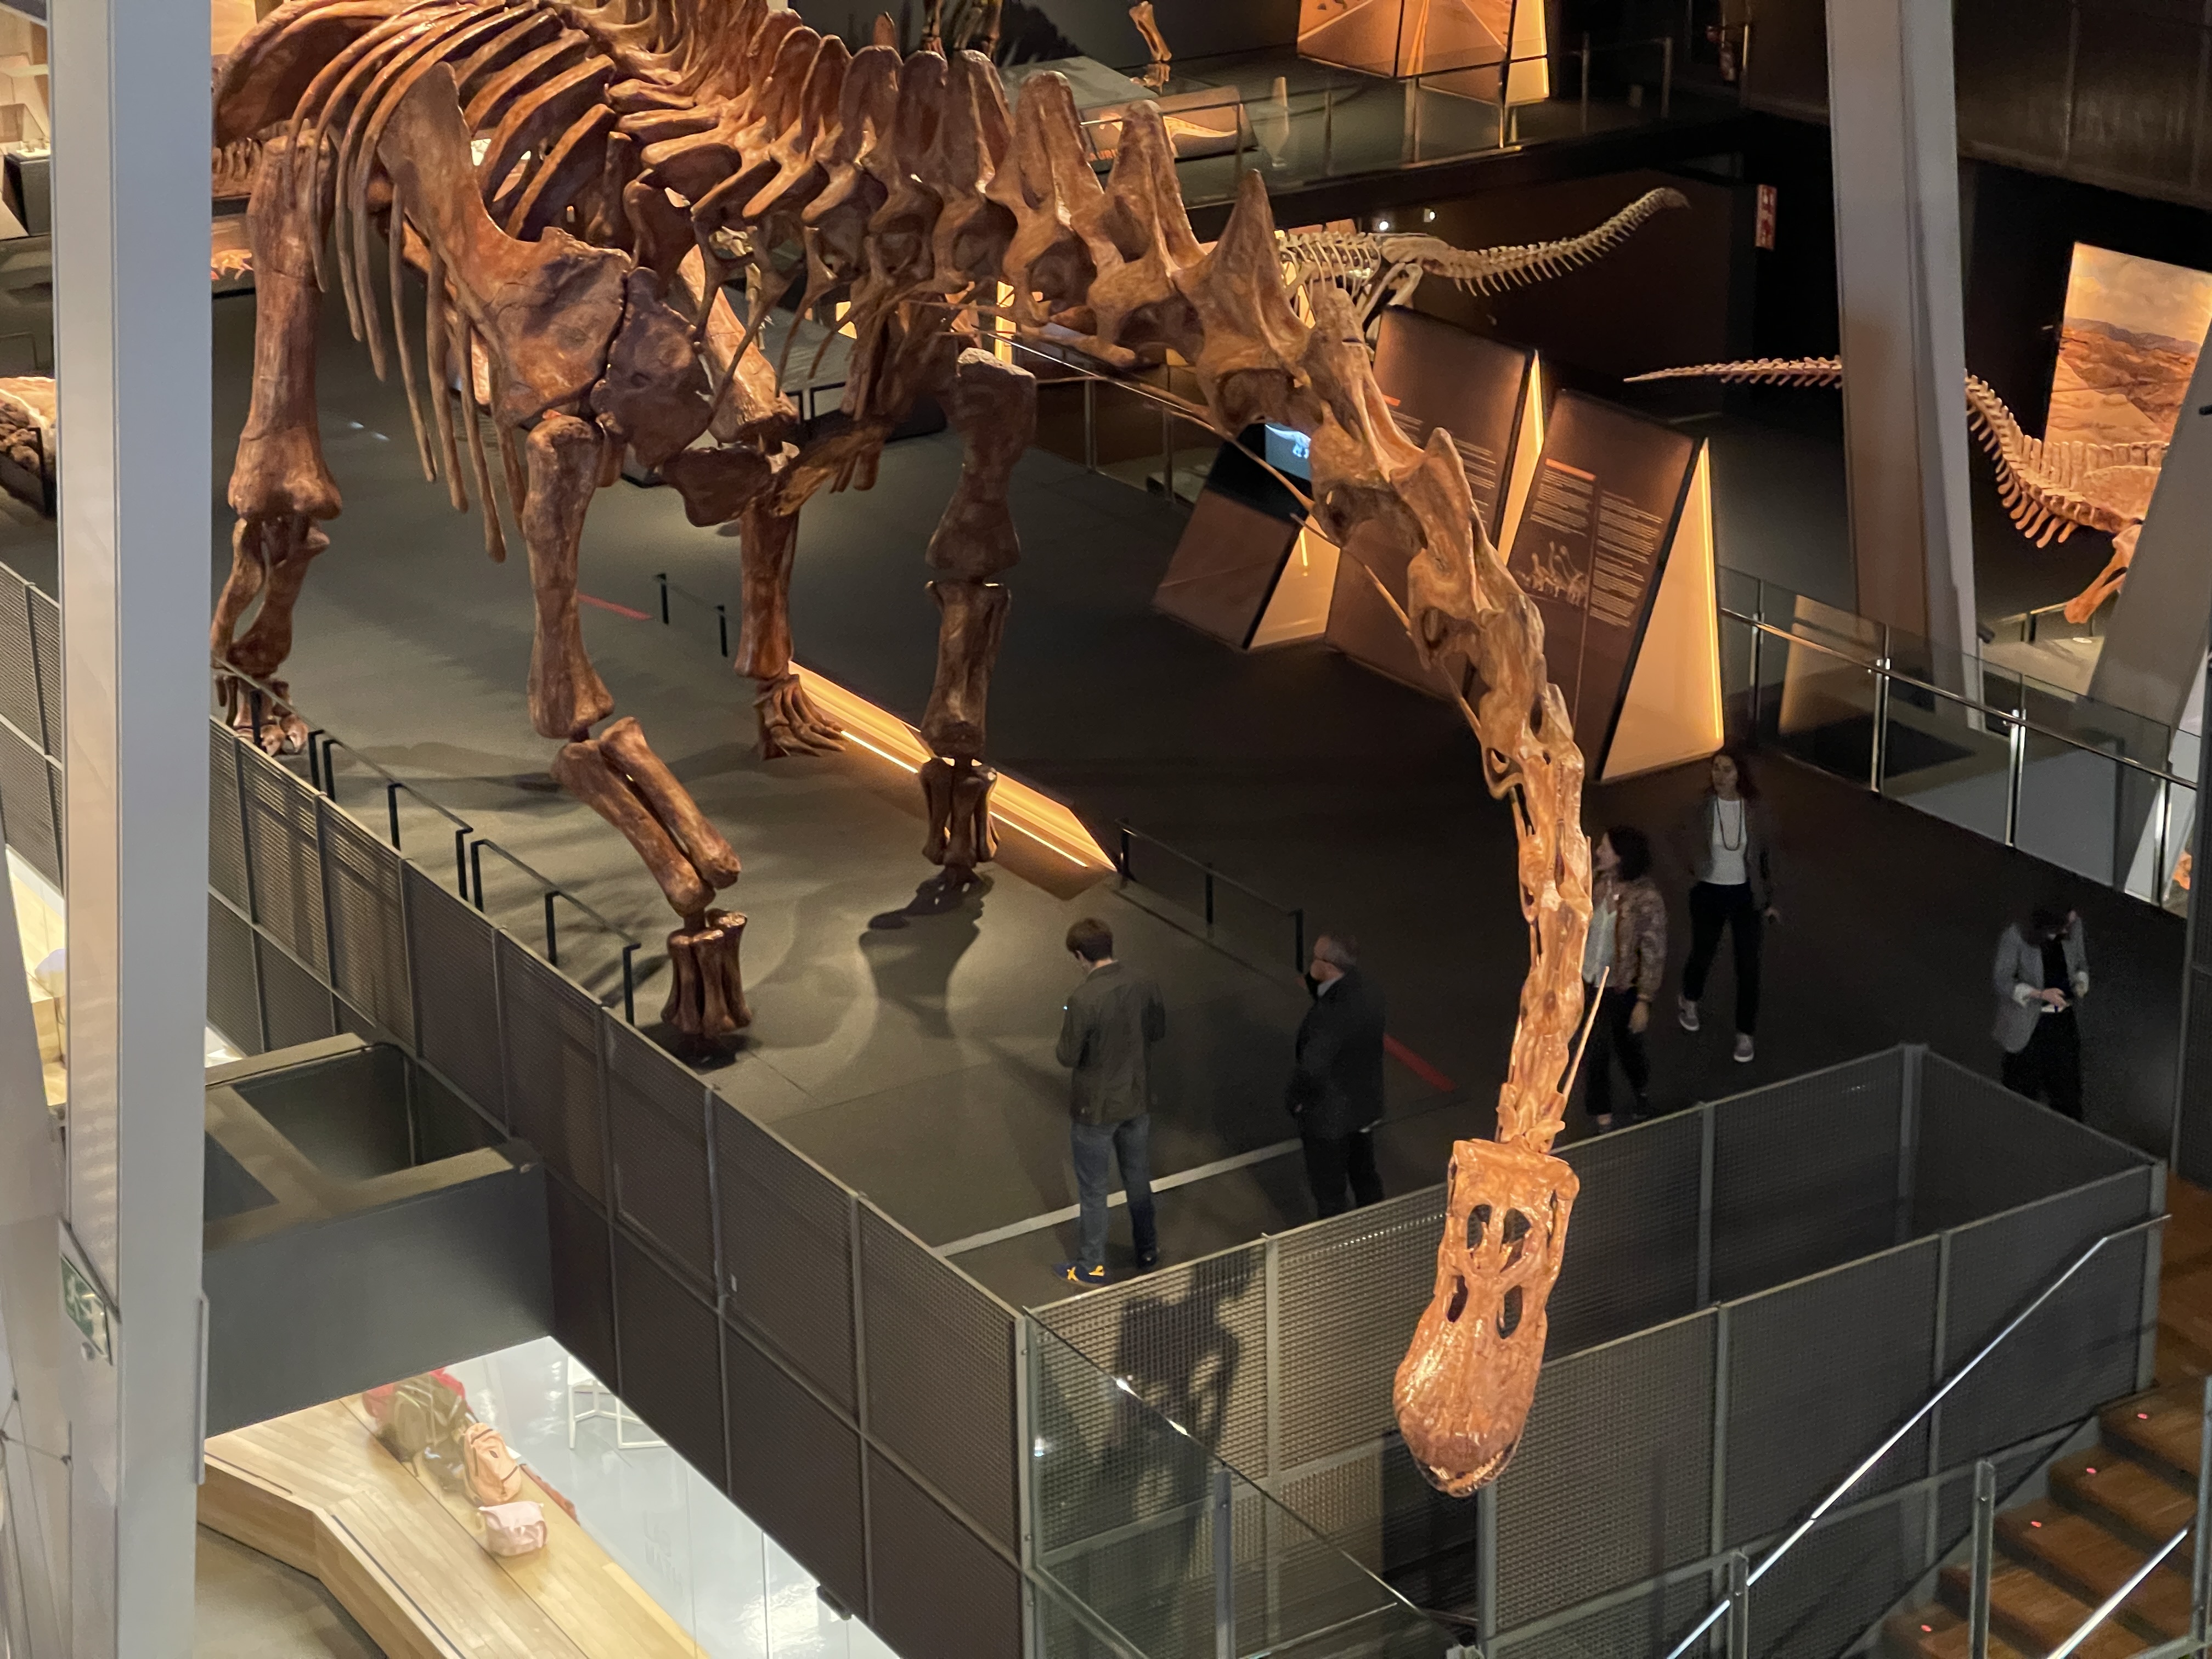 Patagotitan mayorum, part of the Dinosaurs of Patagonia exhibition at CosmoCaixa science museum